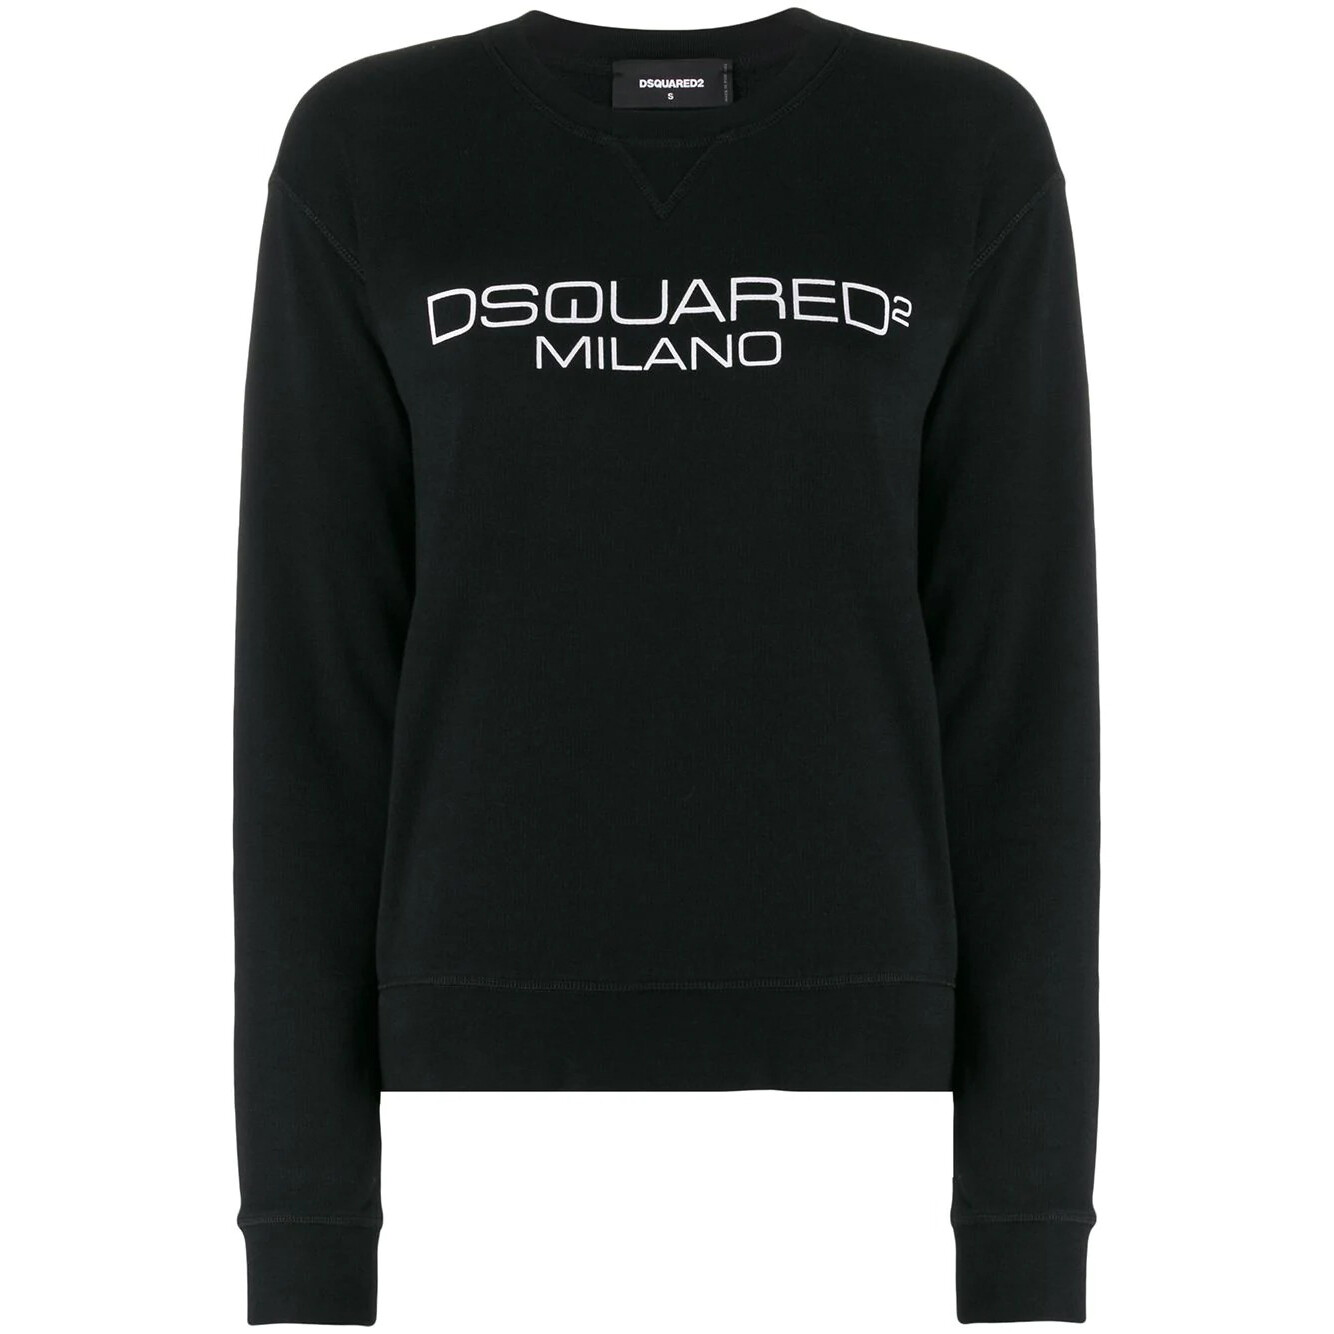 dsquared sweatshirt for sale